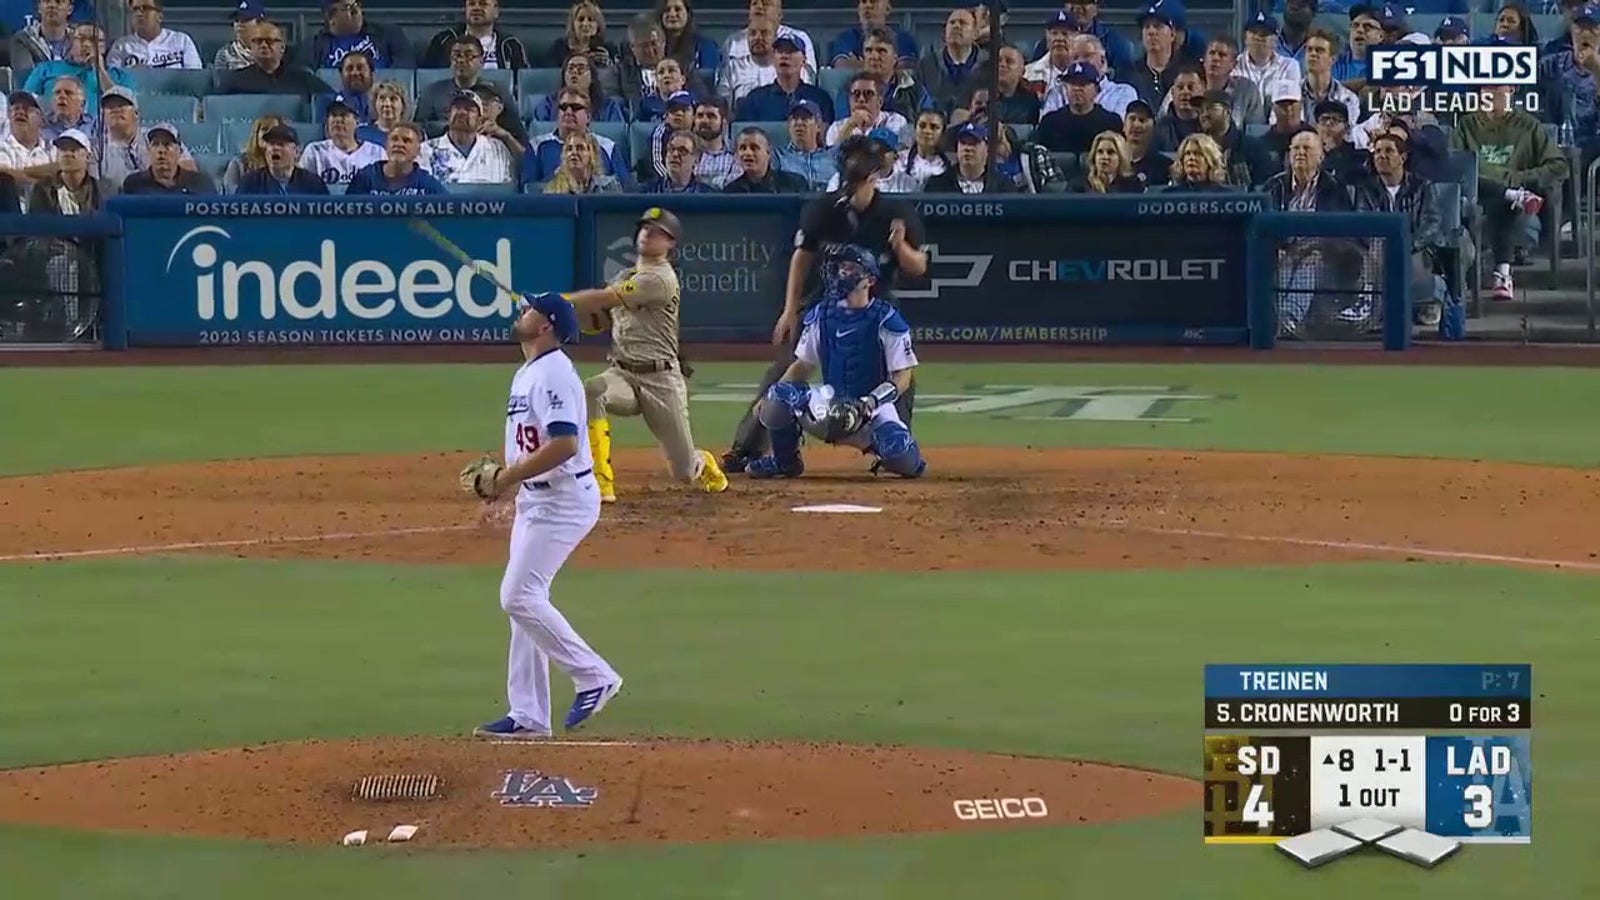 Jake Cronenworth blasts home run to extend lead over Dodgers